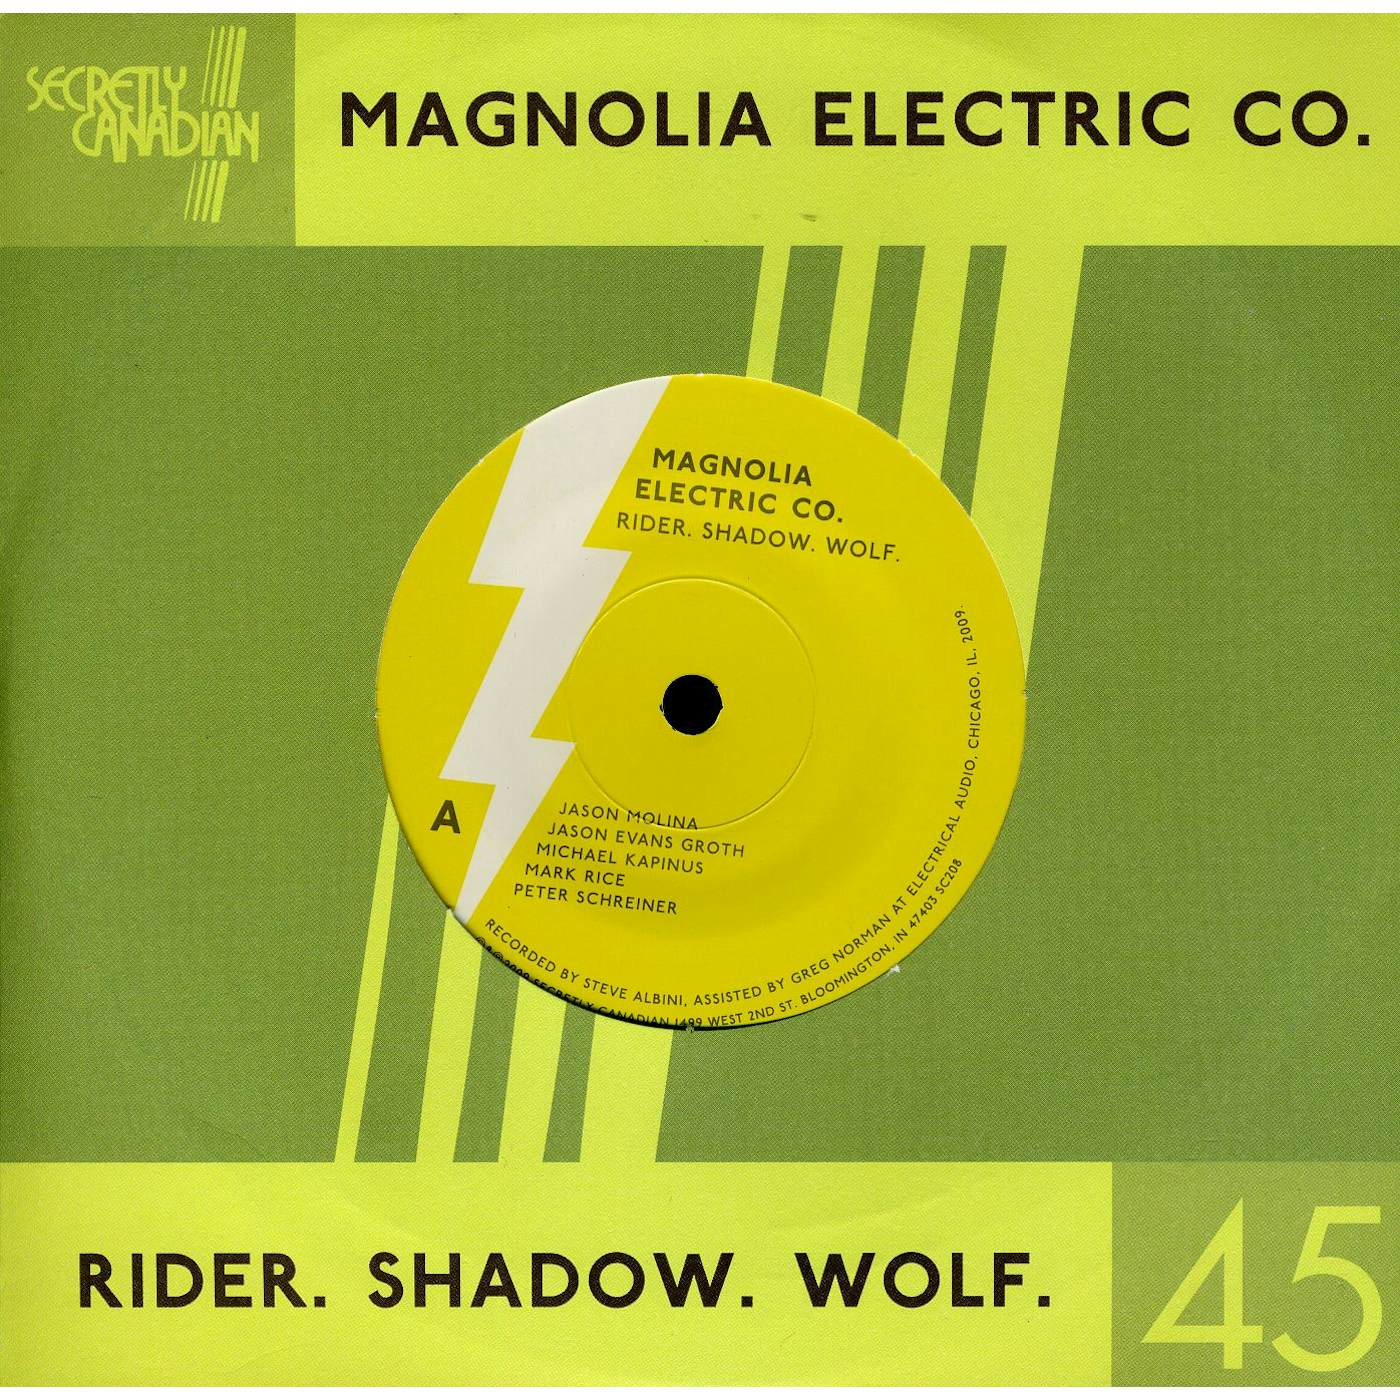 Magnolia Electric Co. RIDER SHADOW WOLF Vinyl Record